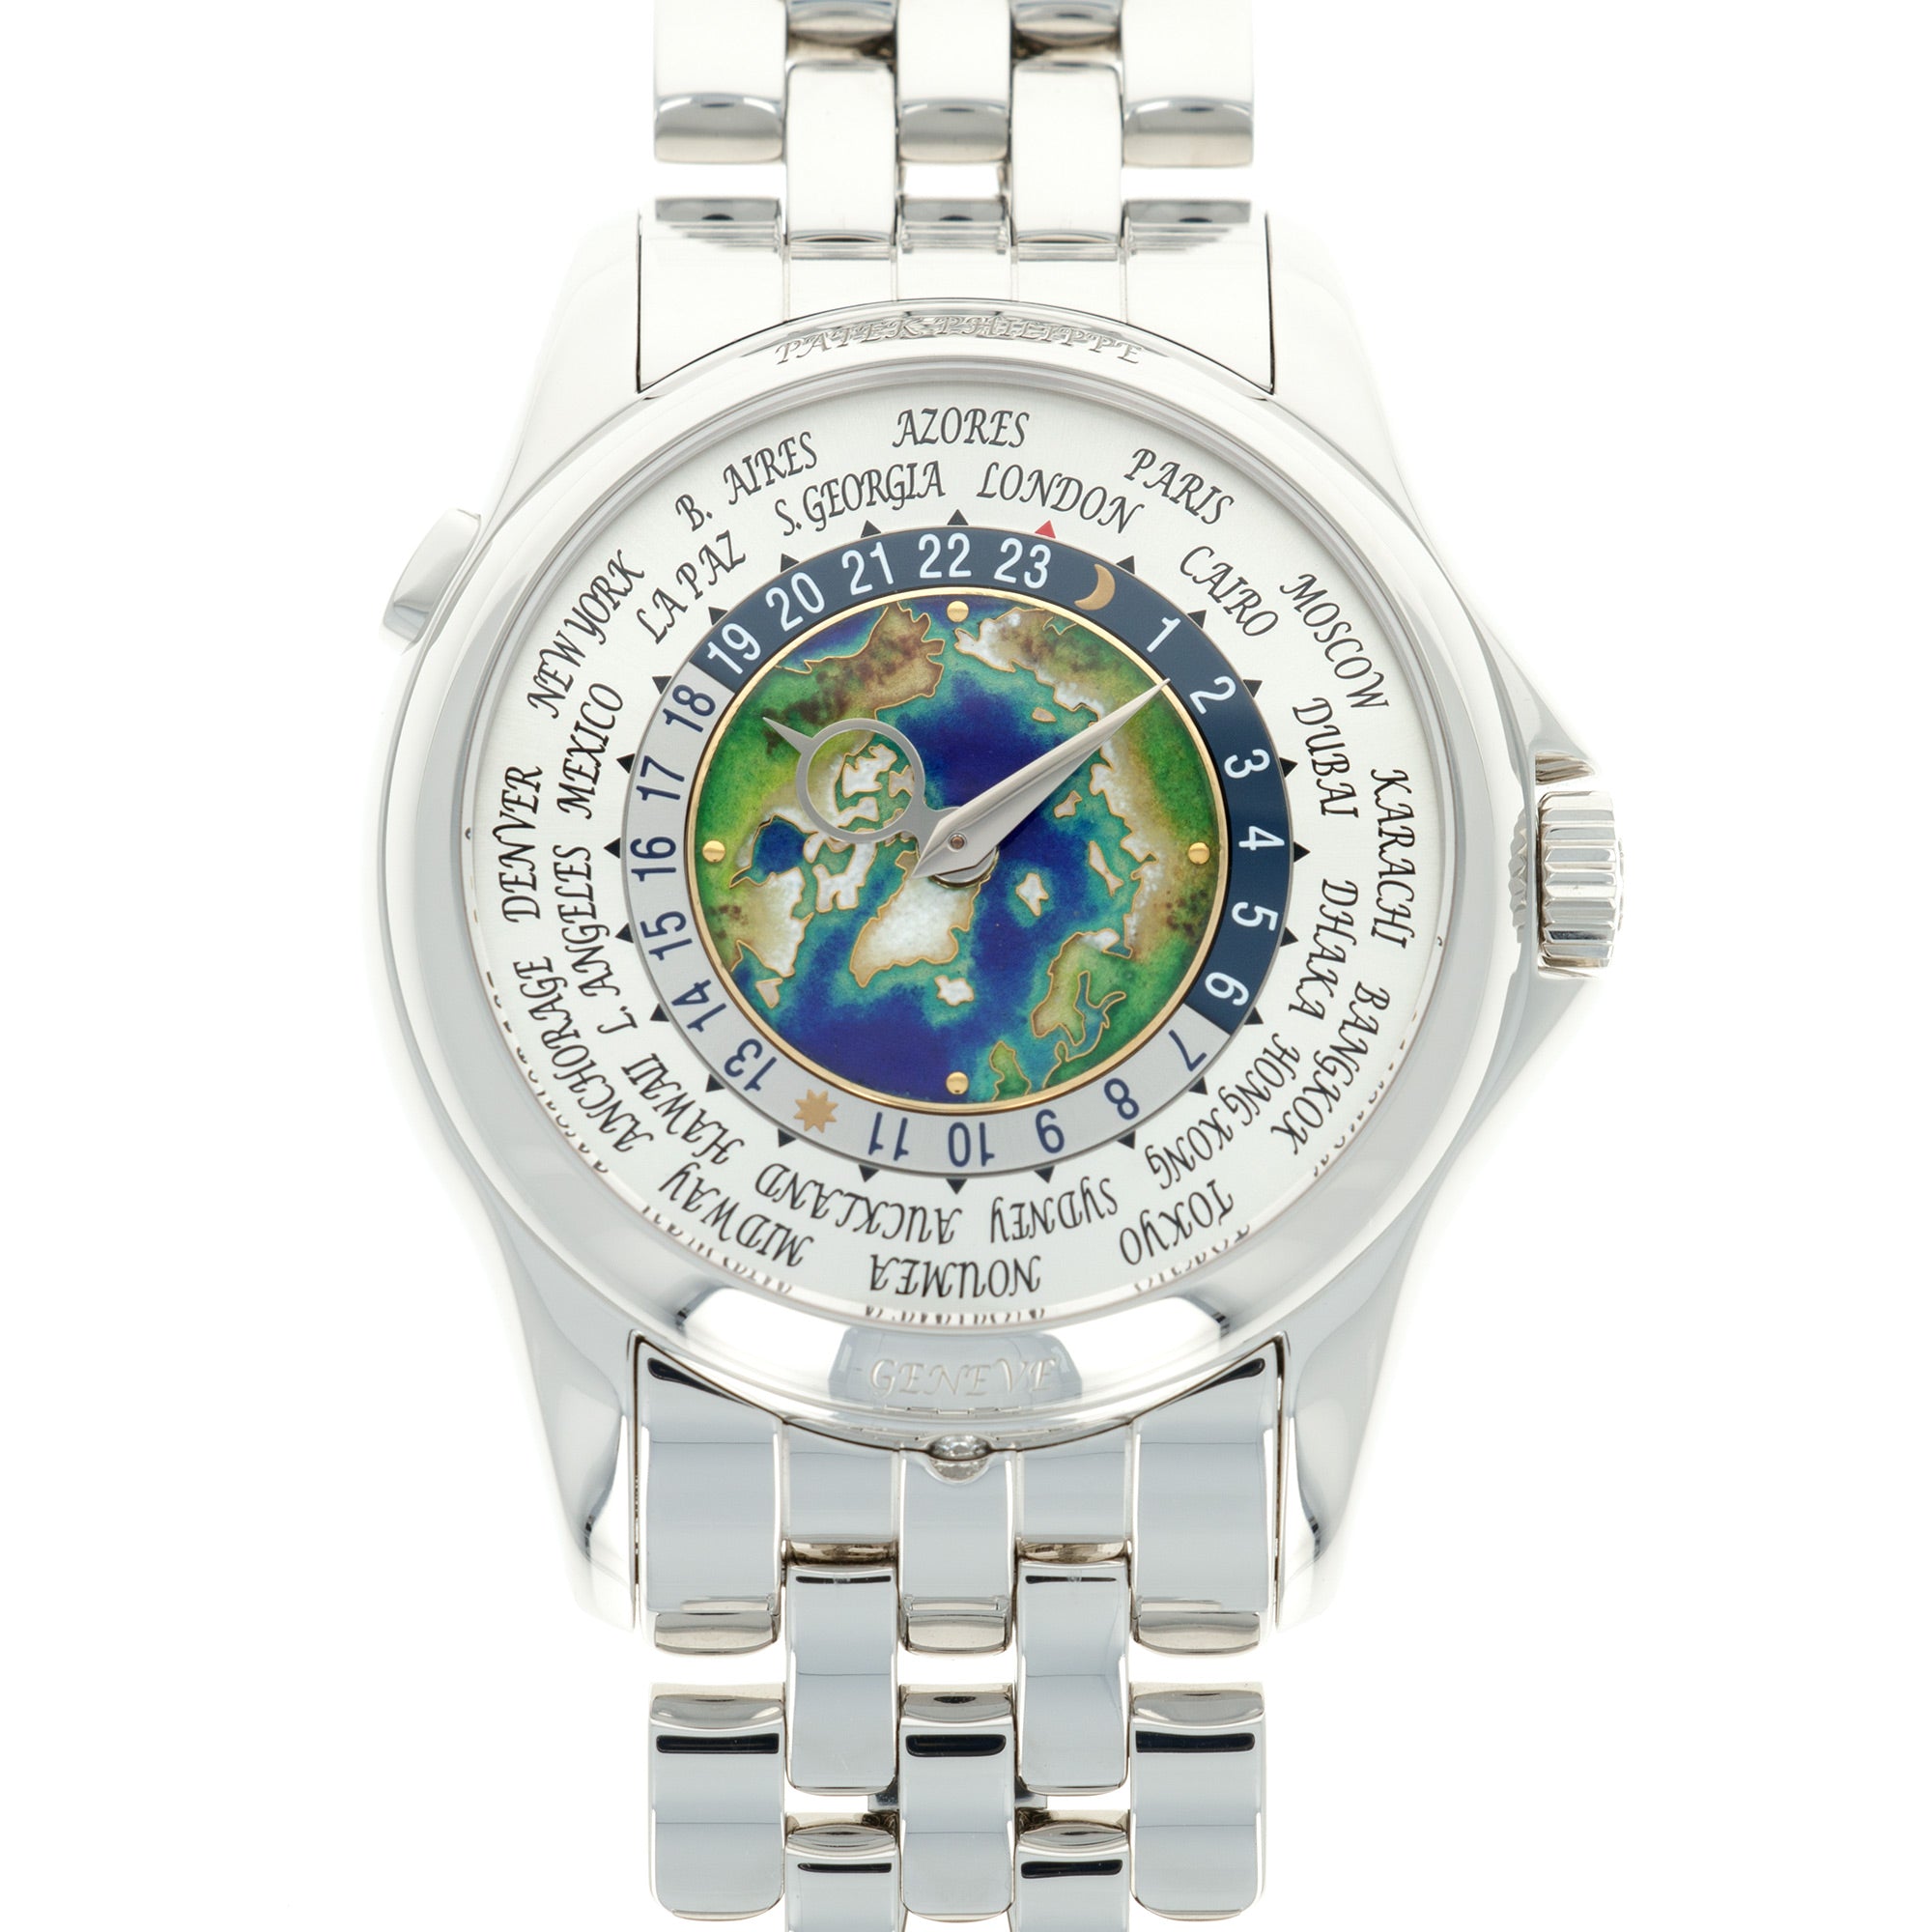 Patek Philippe - Patek Philippe Platinum World Time Watch Ref. 5131 - The Keystone Watches